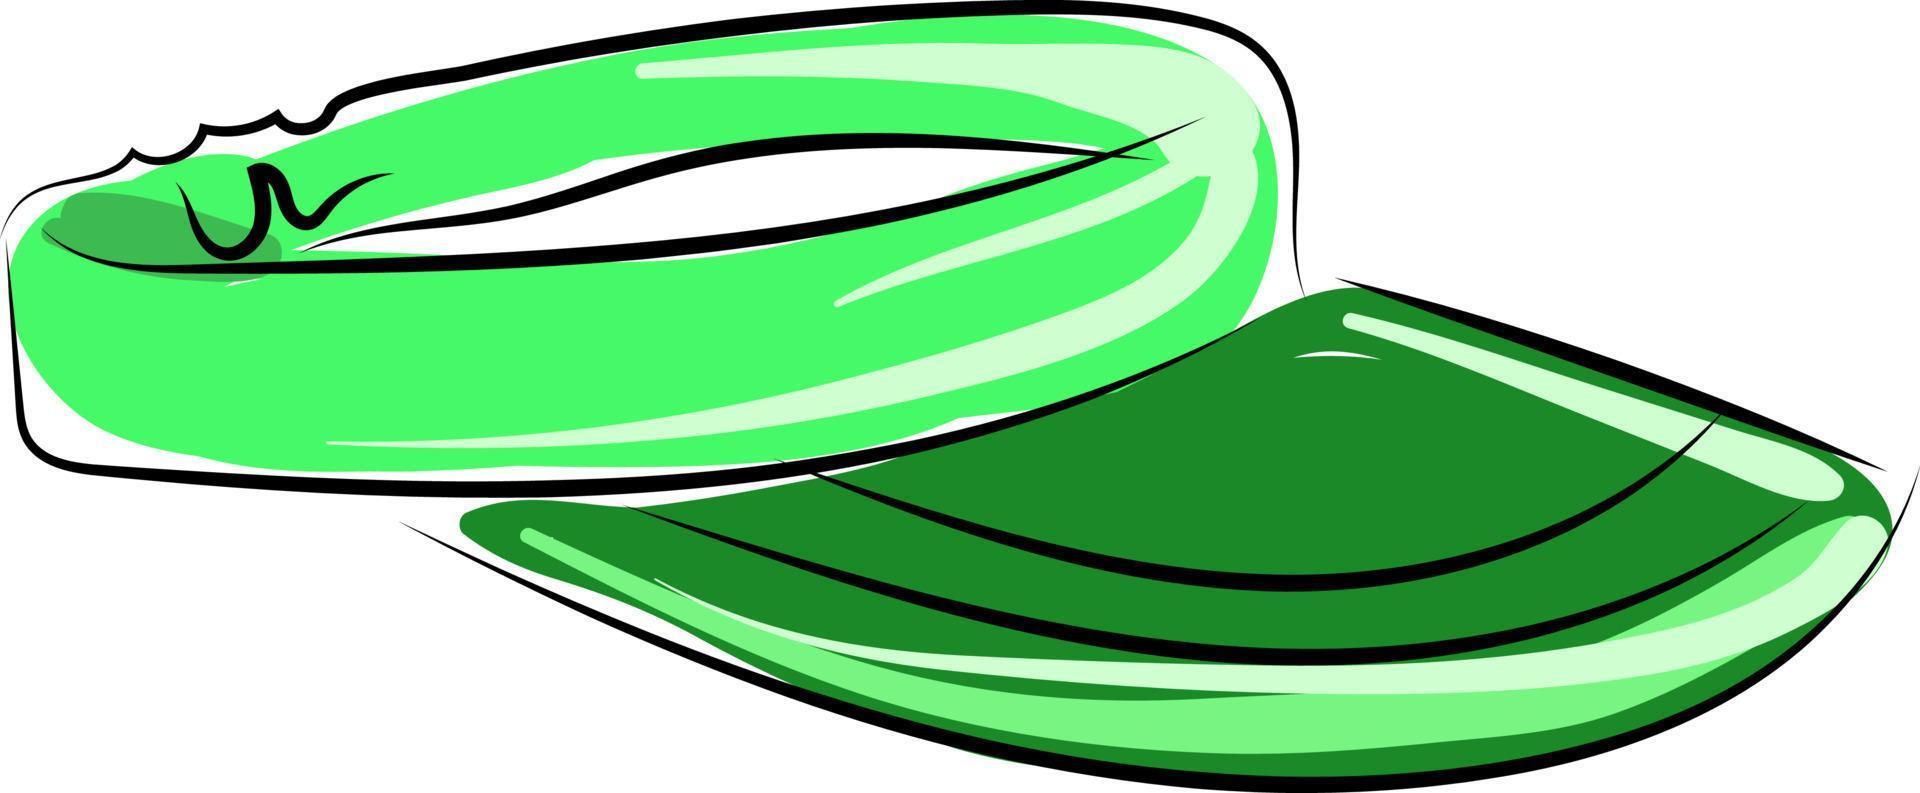 Green cap, illustration, vector on white background.